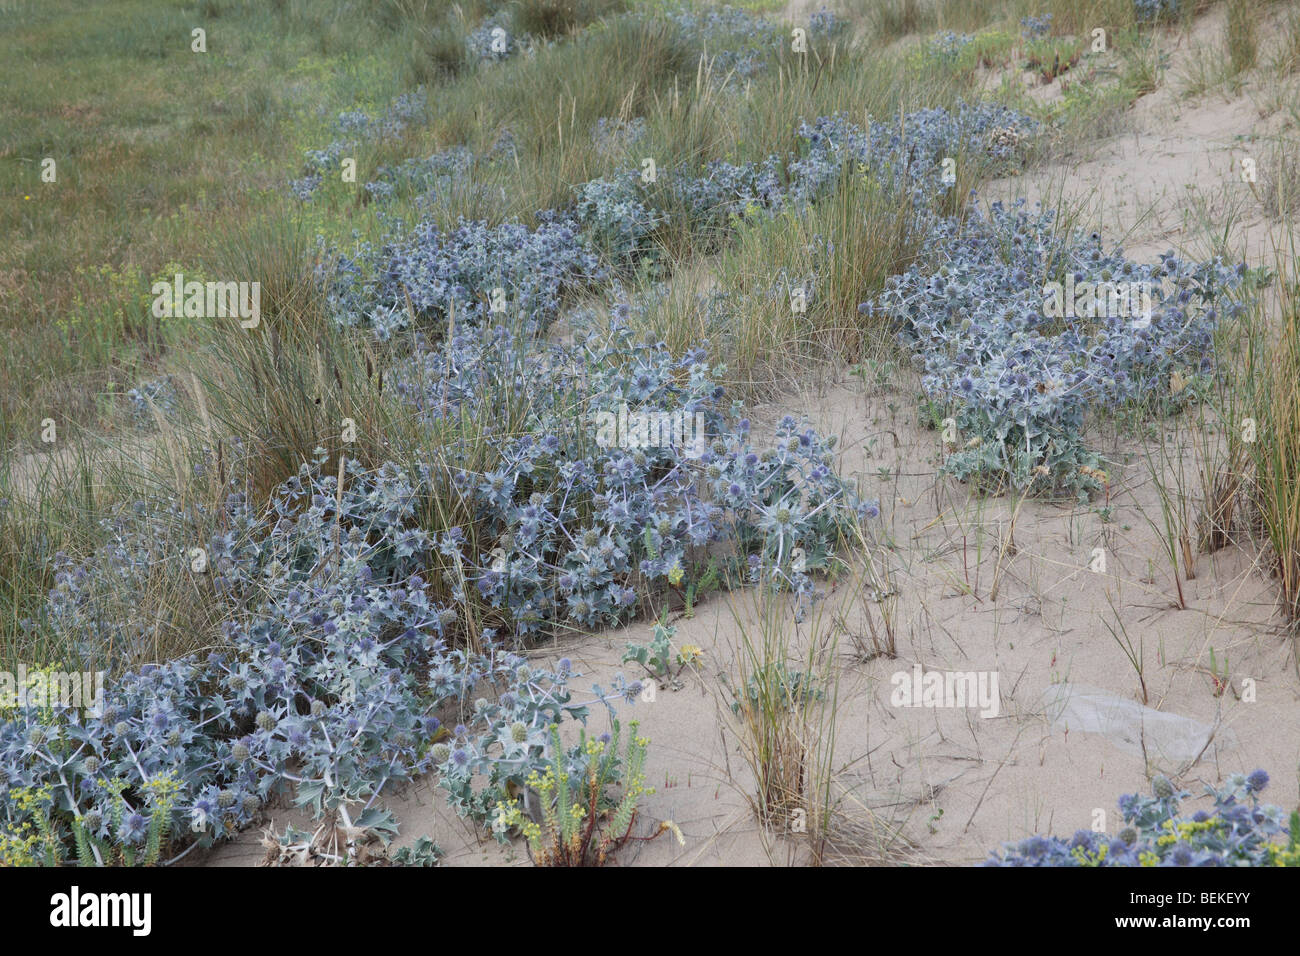 Sea holly (Eryngium maritimum) plants flowering in dunes Stock Photo